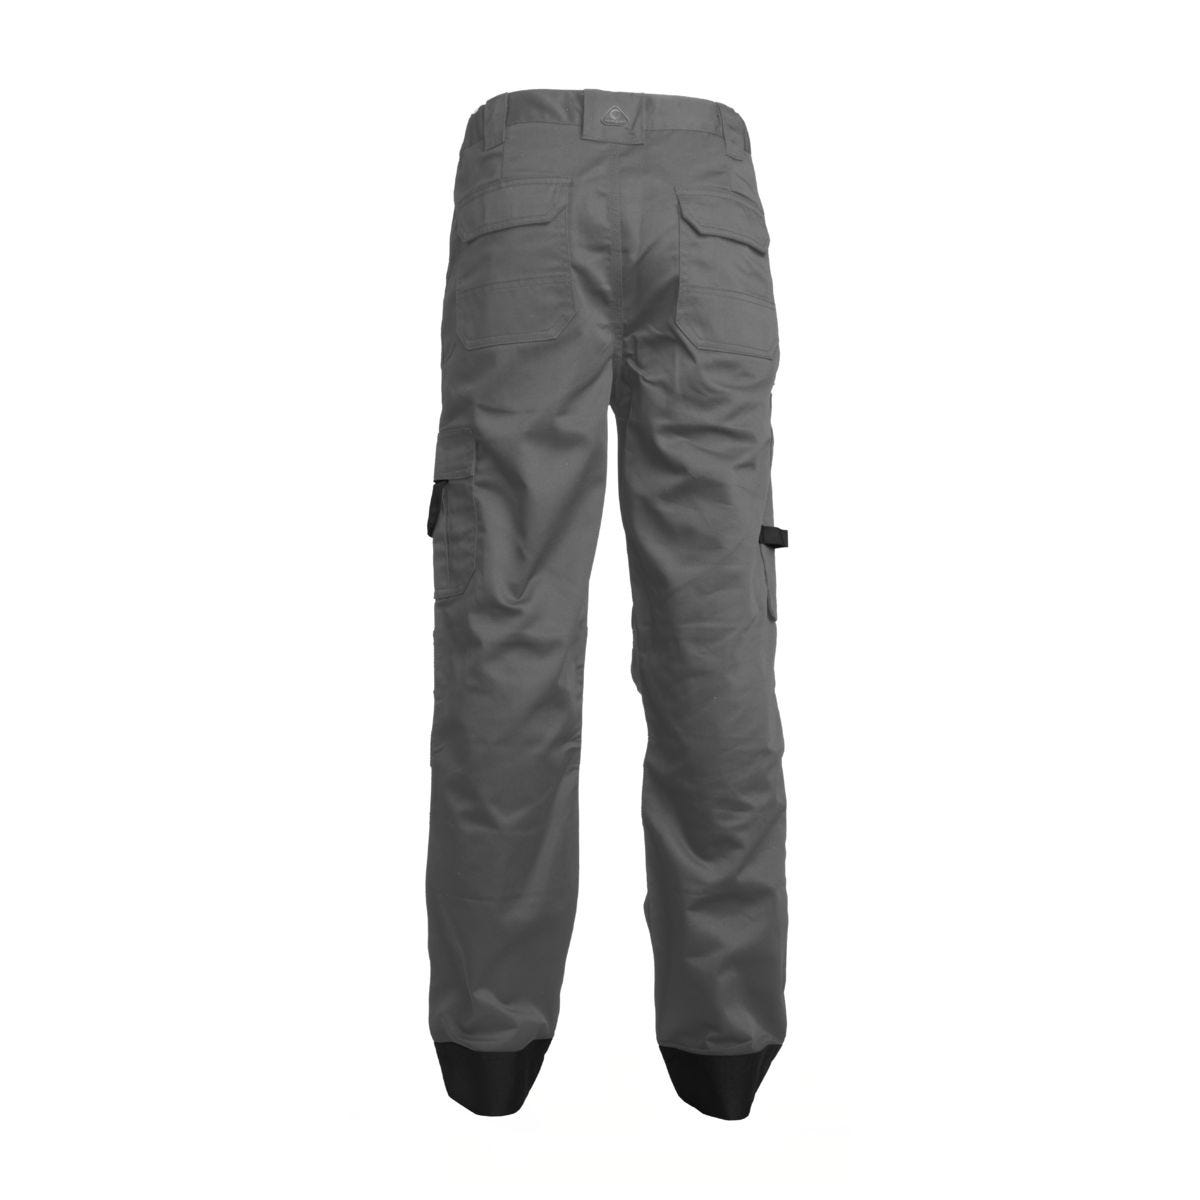 Pantalon CLASS gris moyen - COVERGUARD - Taille XL 1